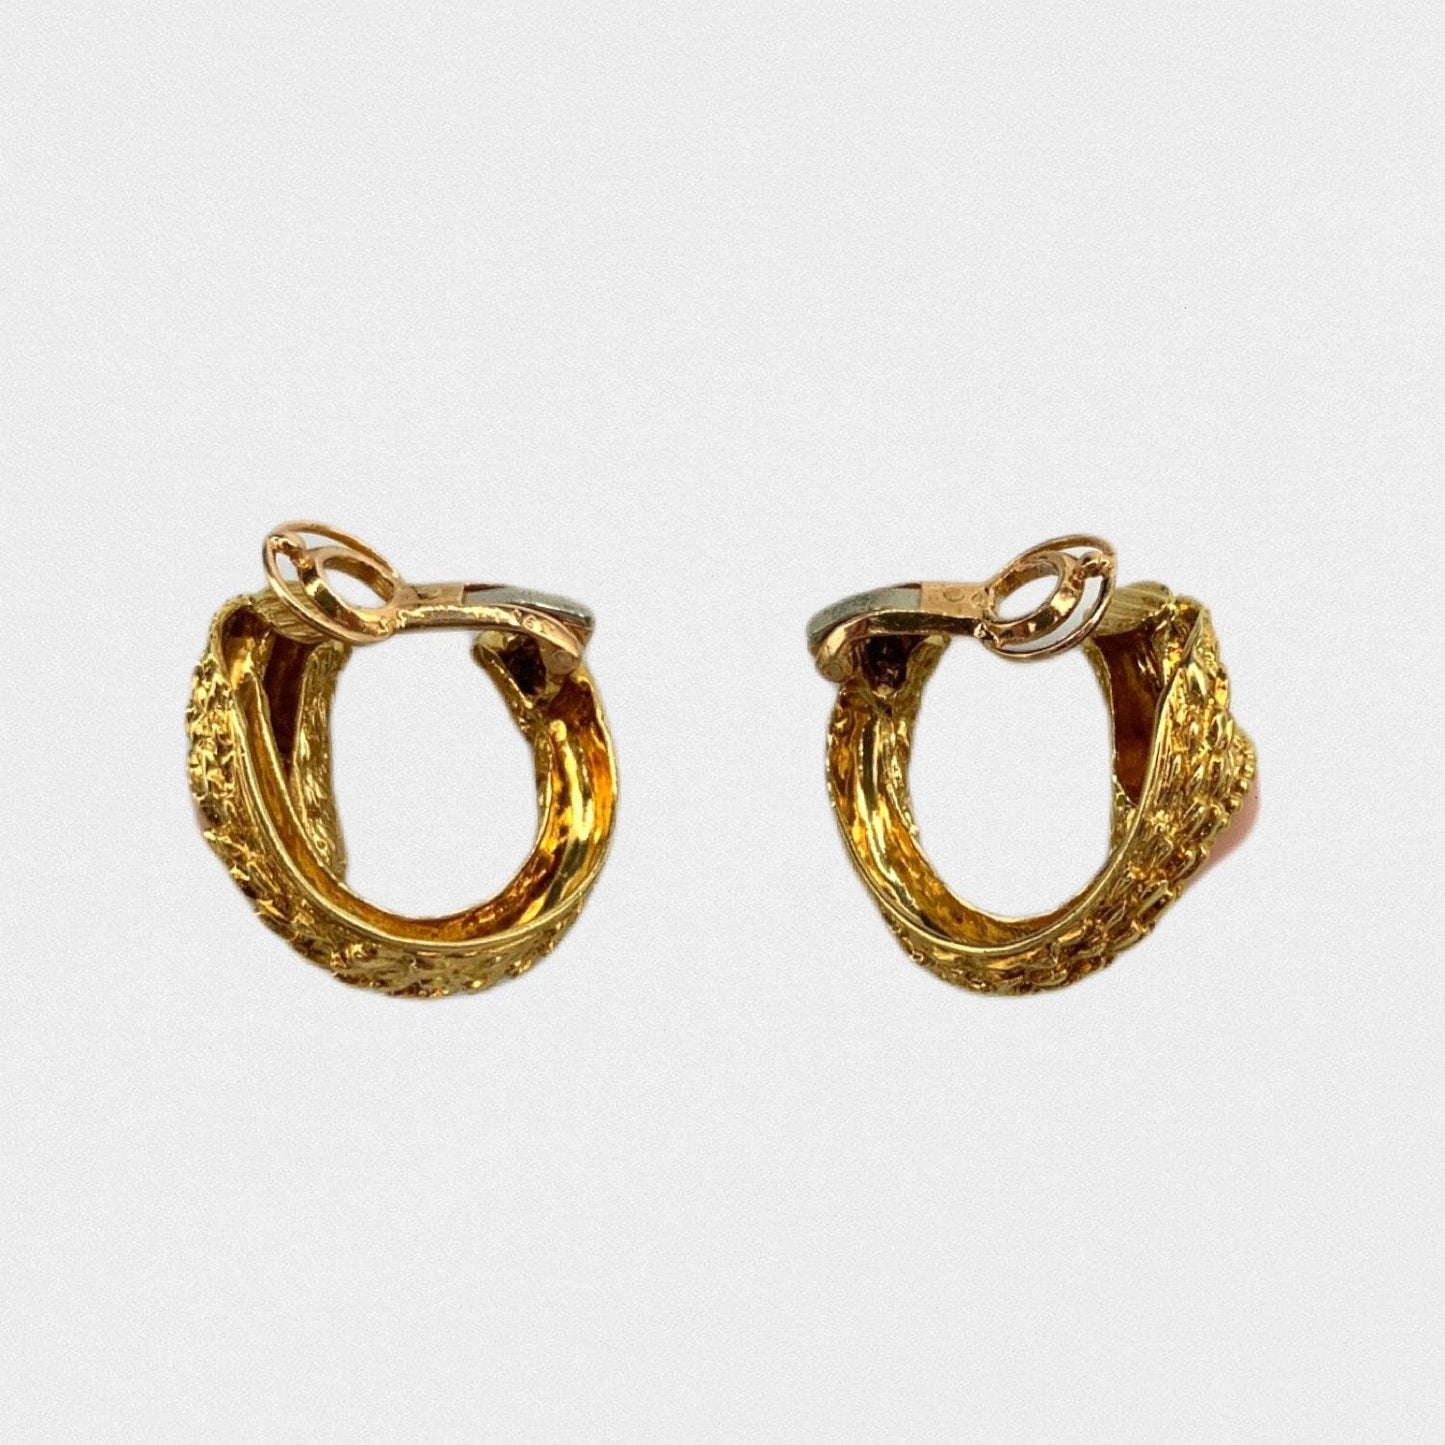 Lysis vintage Boucheron earrings Serpent Bohème - 1970s